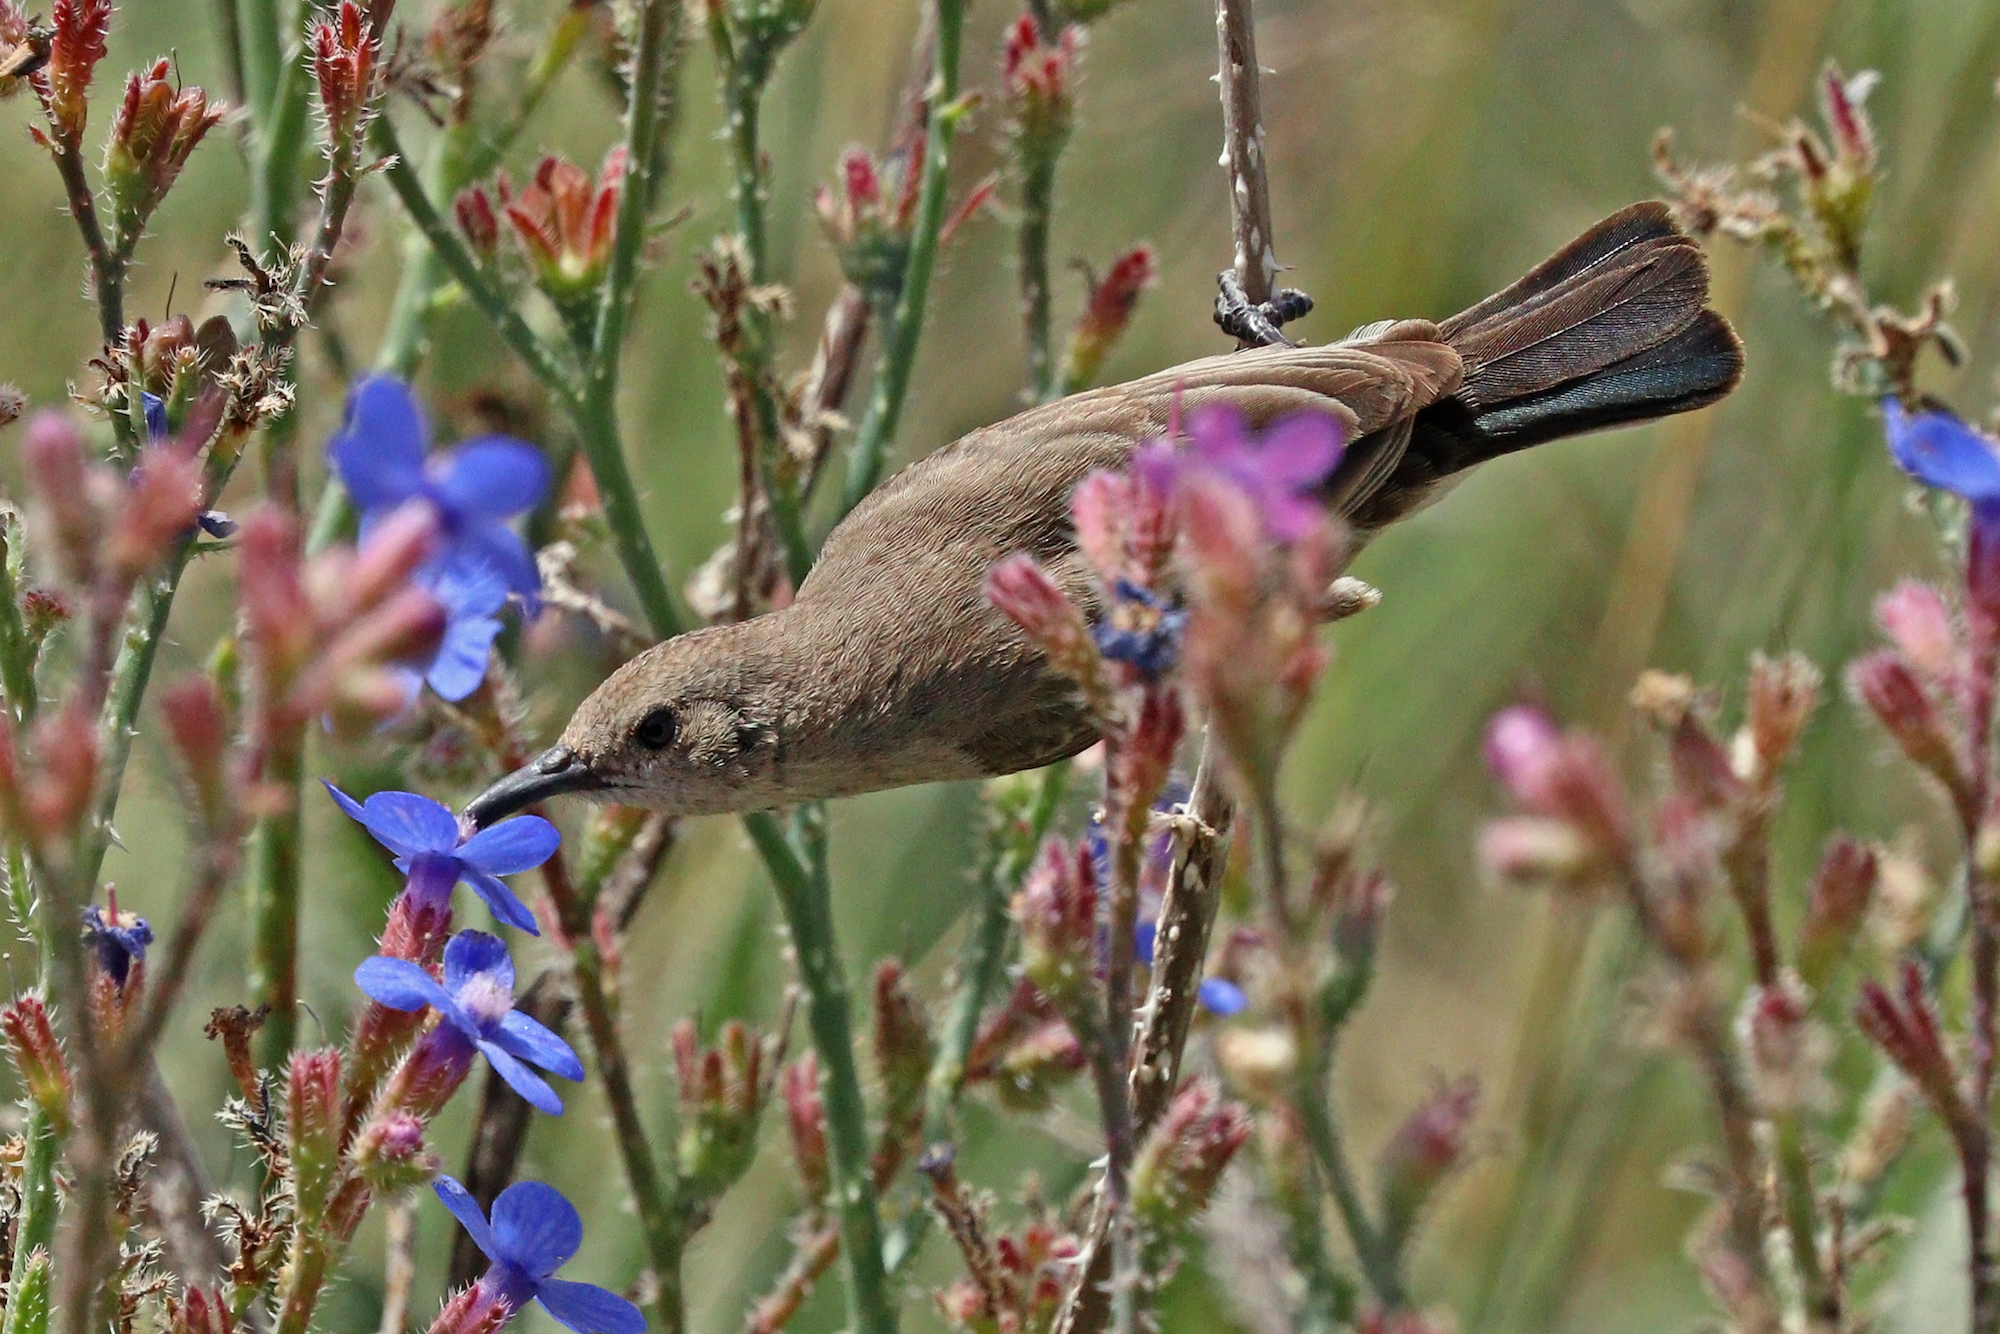 Brown bird eating nectar from a flower